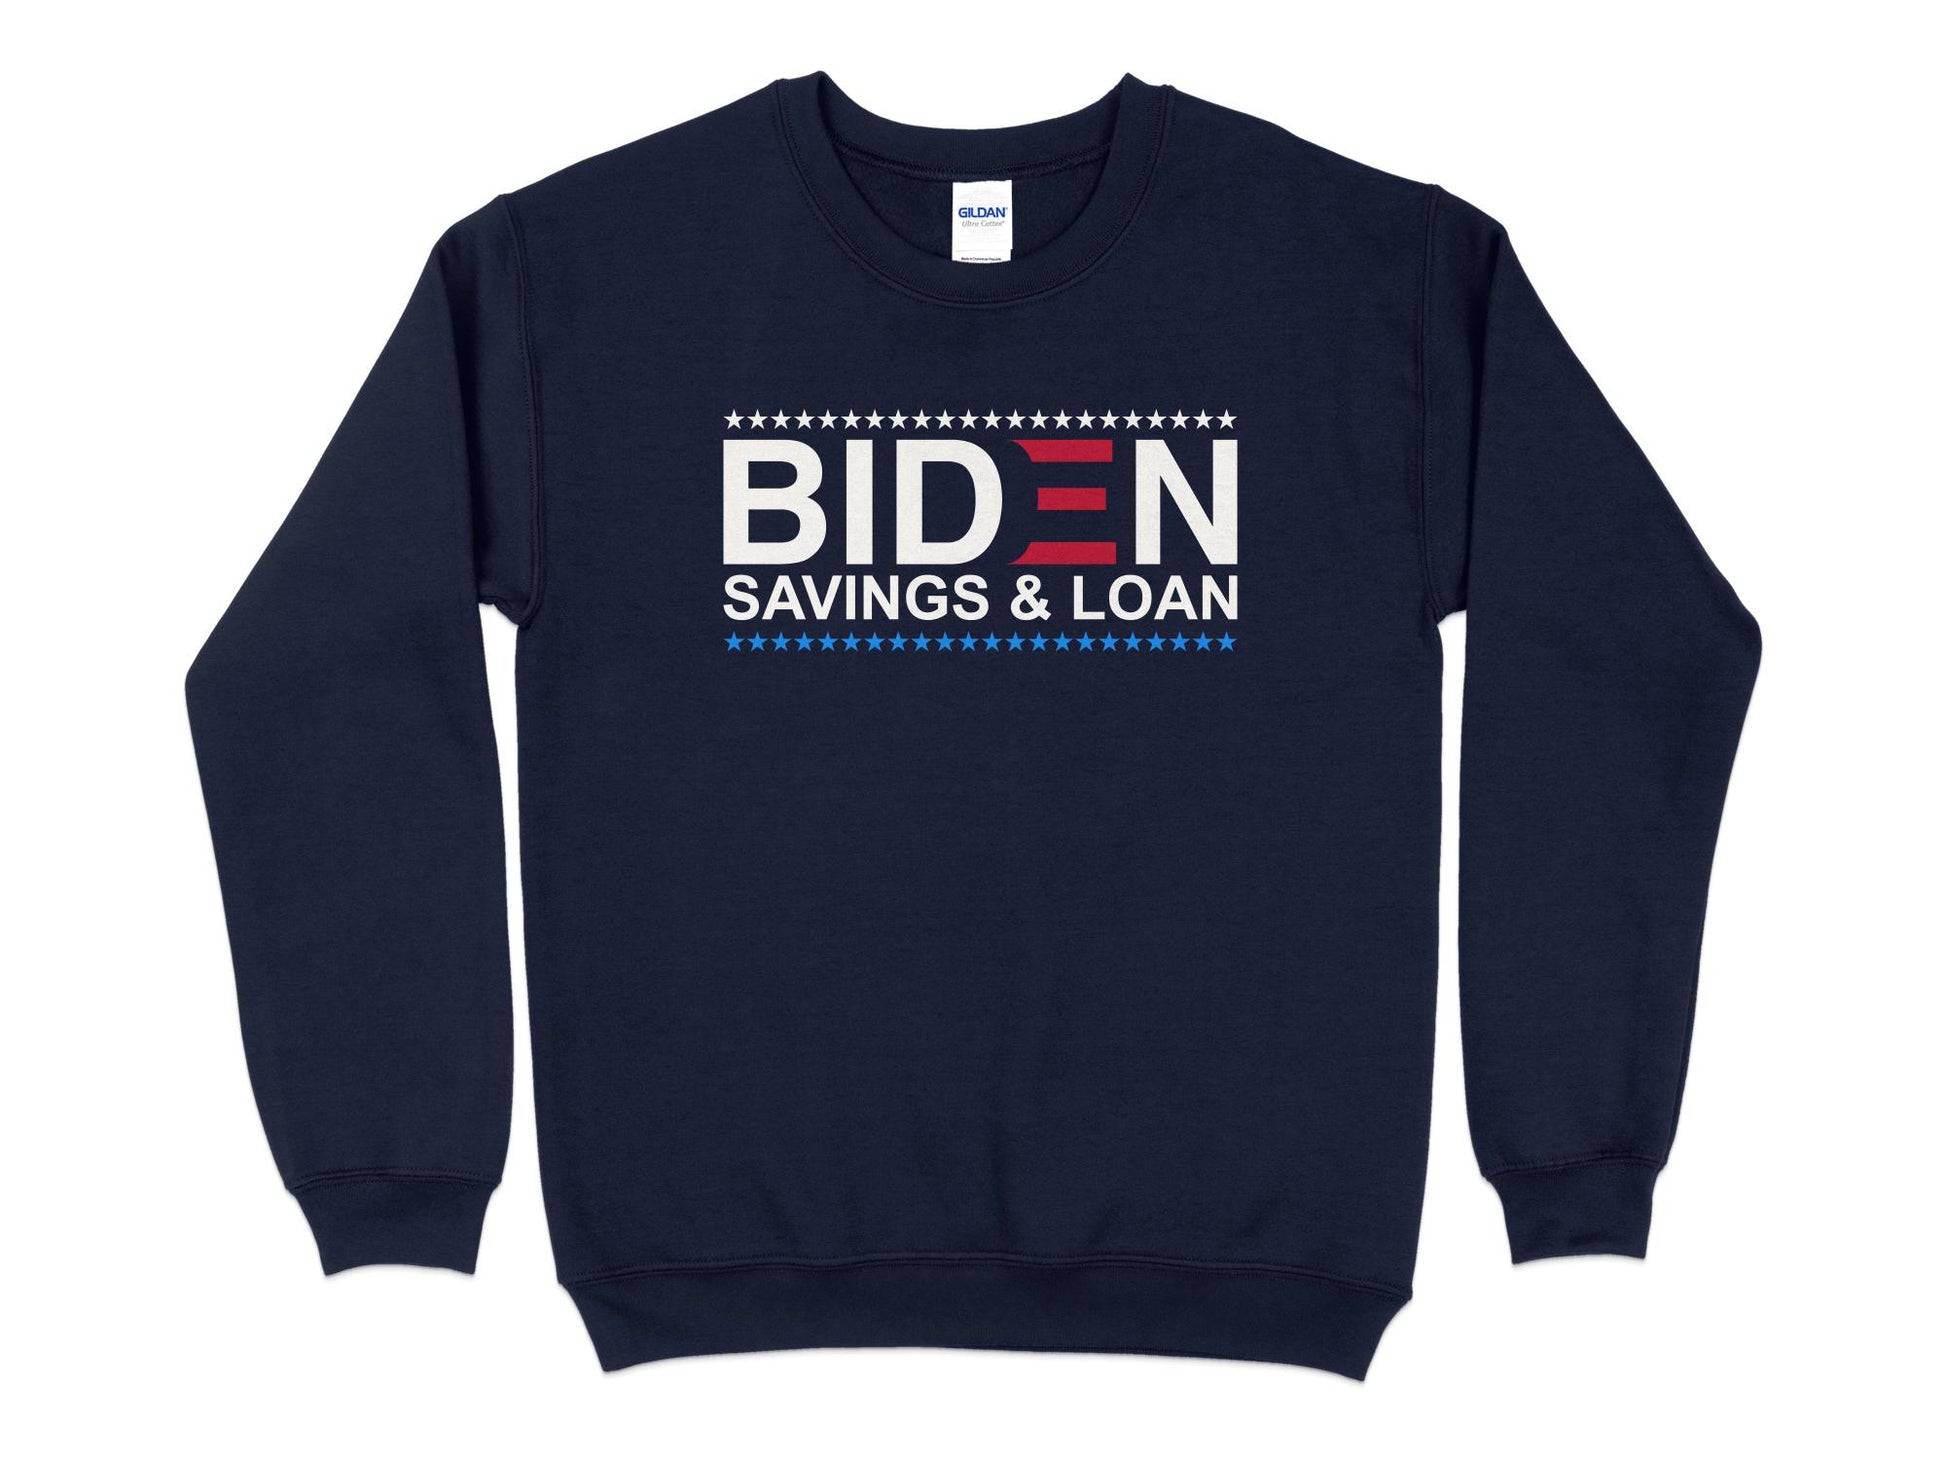 Joe Biden Sweatshirt - Savings and Loan, navy blue